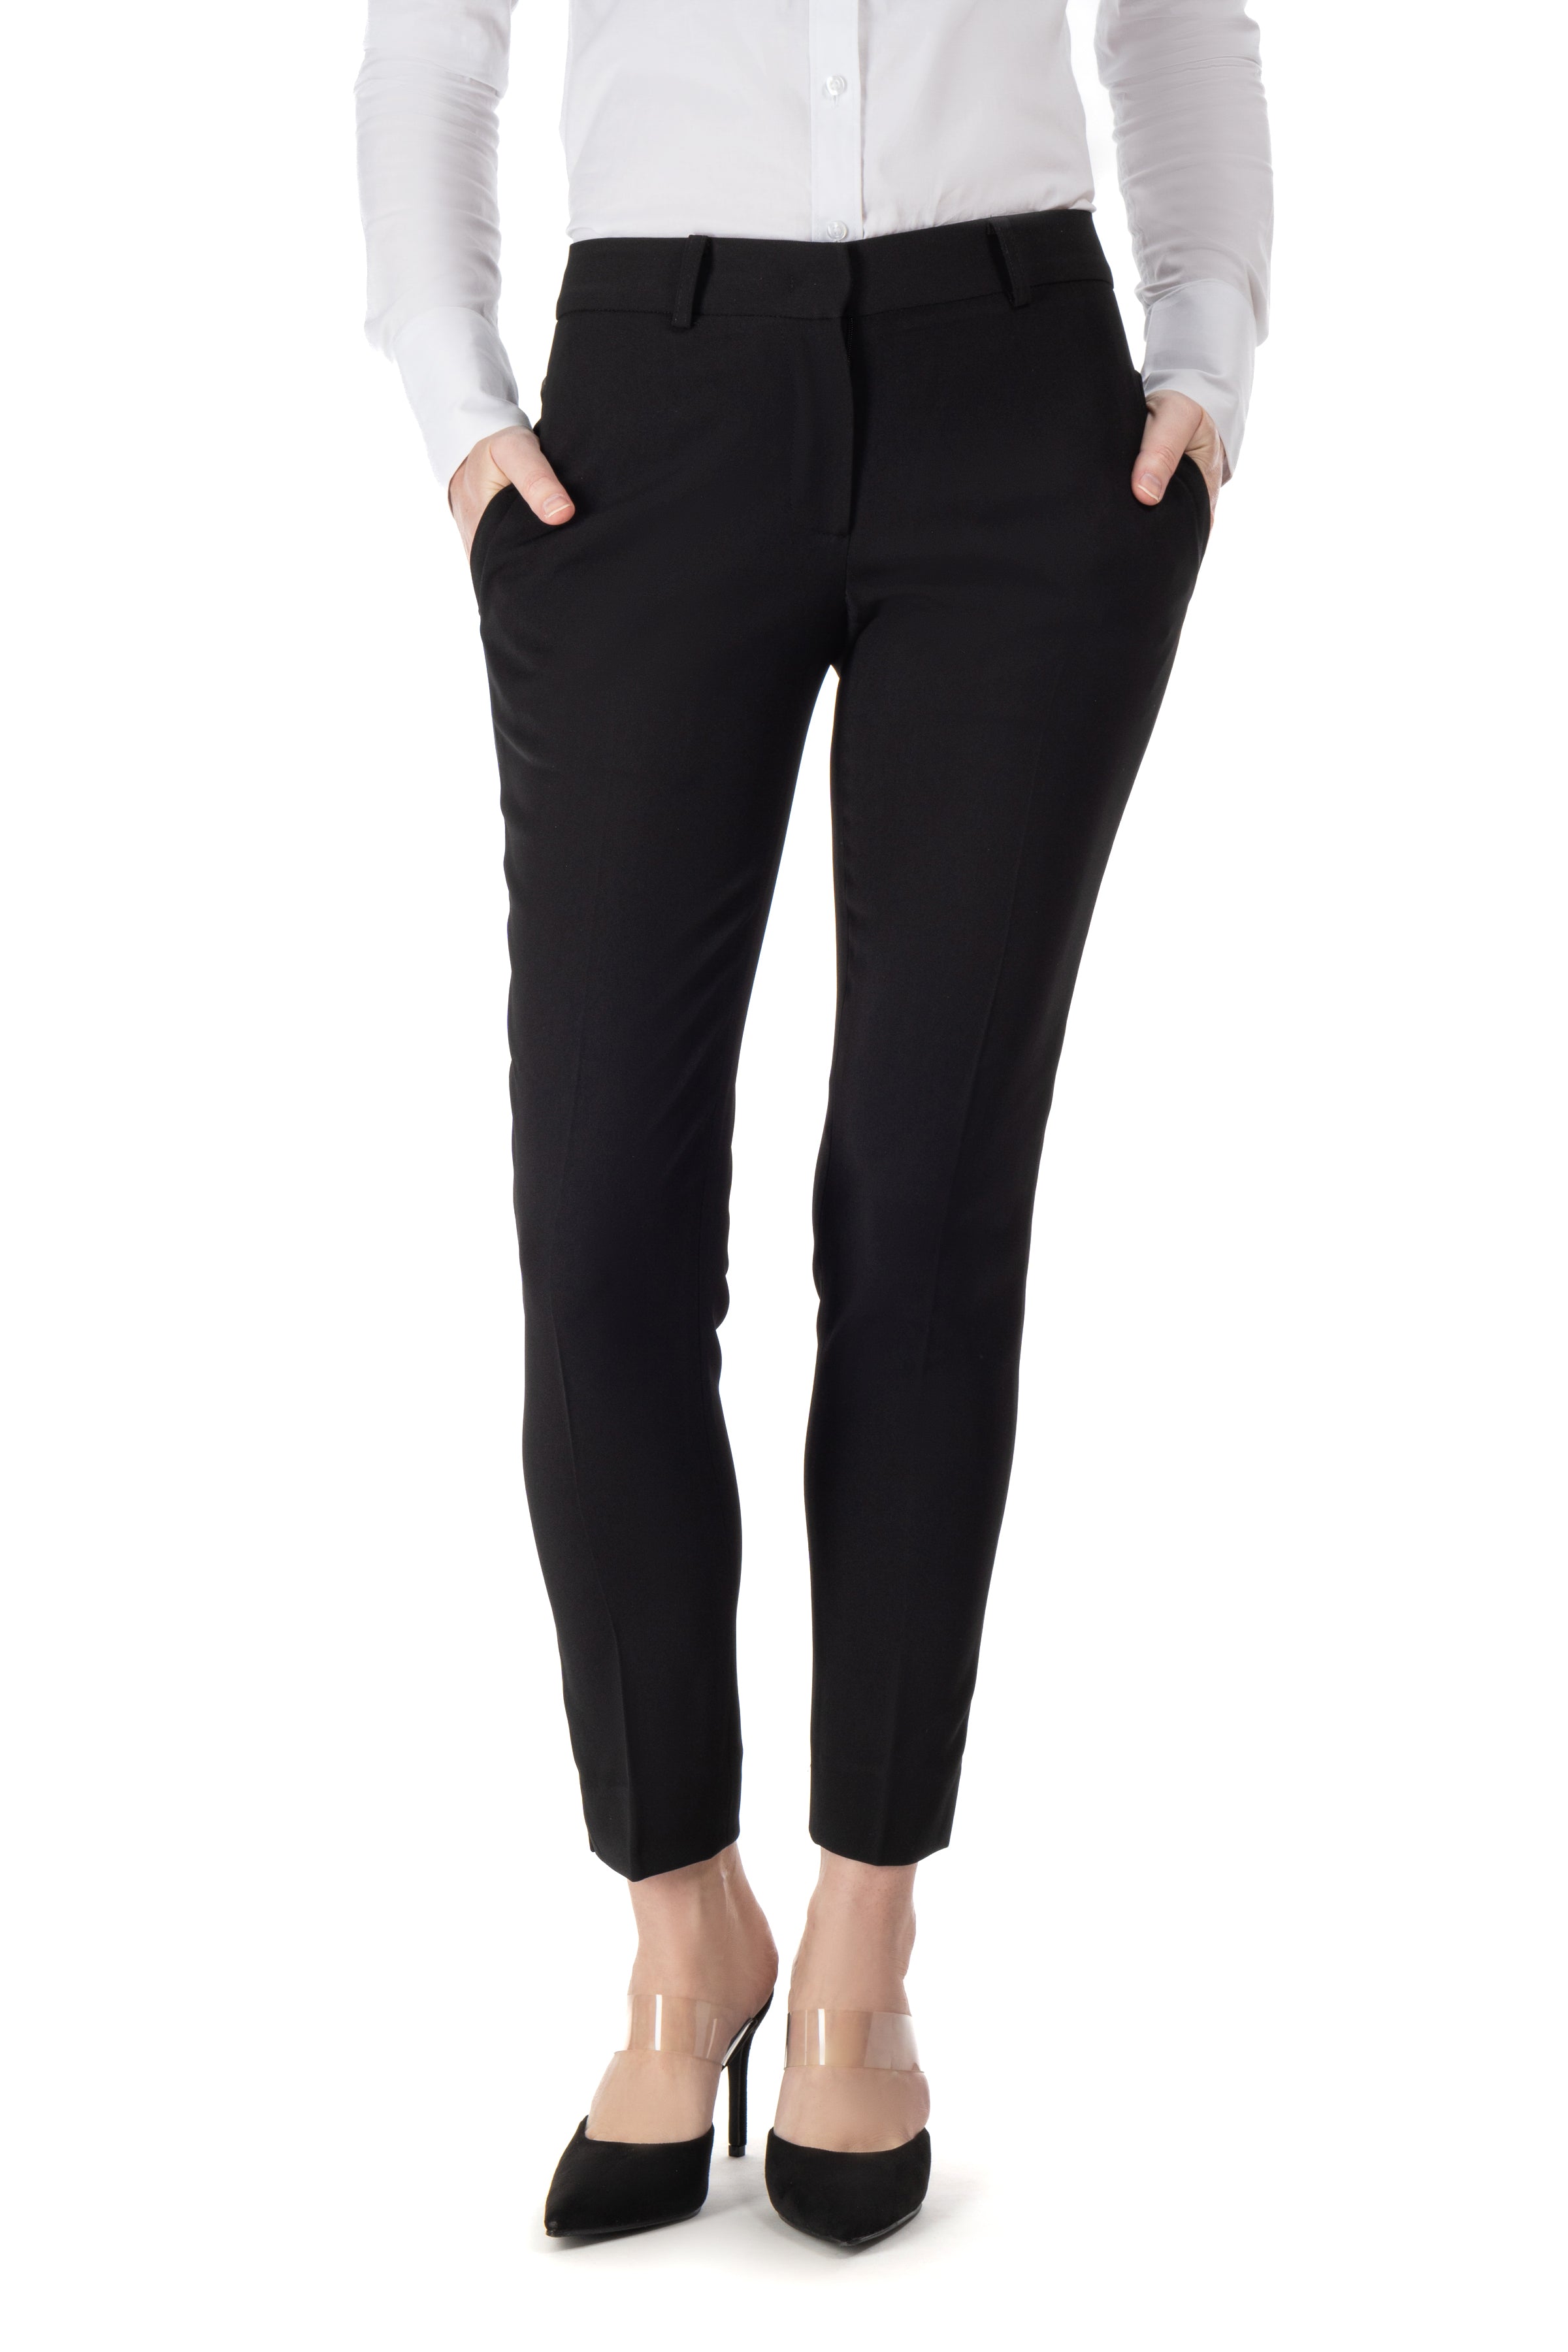 Buy Men Black Solid Regular Fit Casual Trousers Online - 806294 | Peter  England